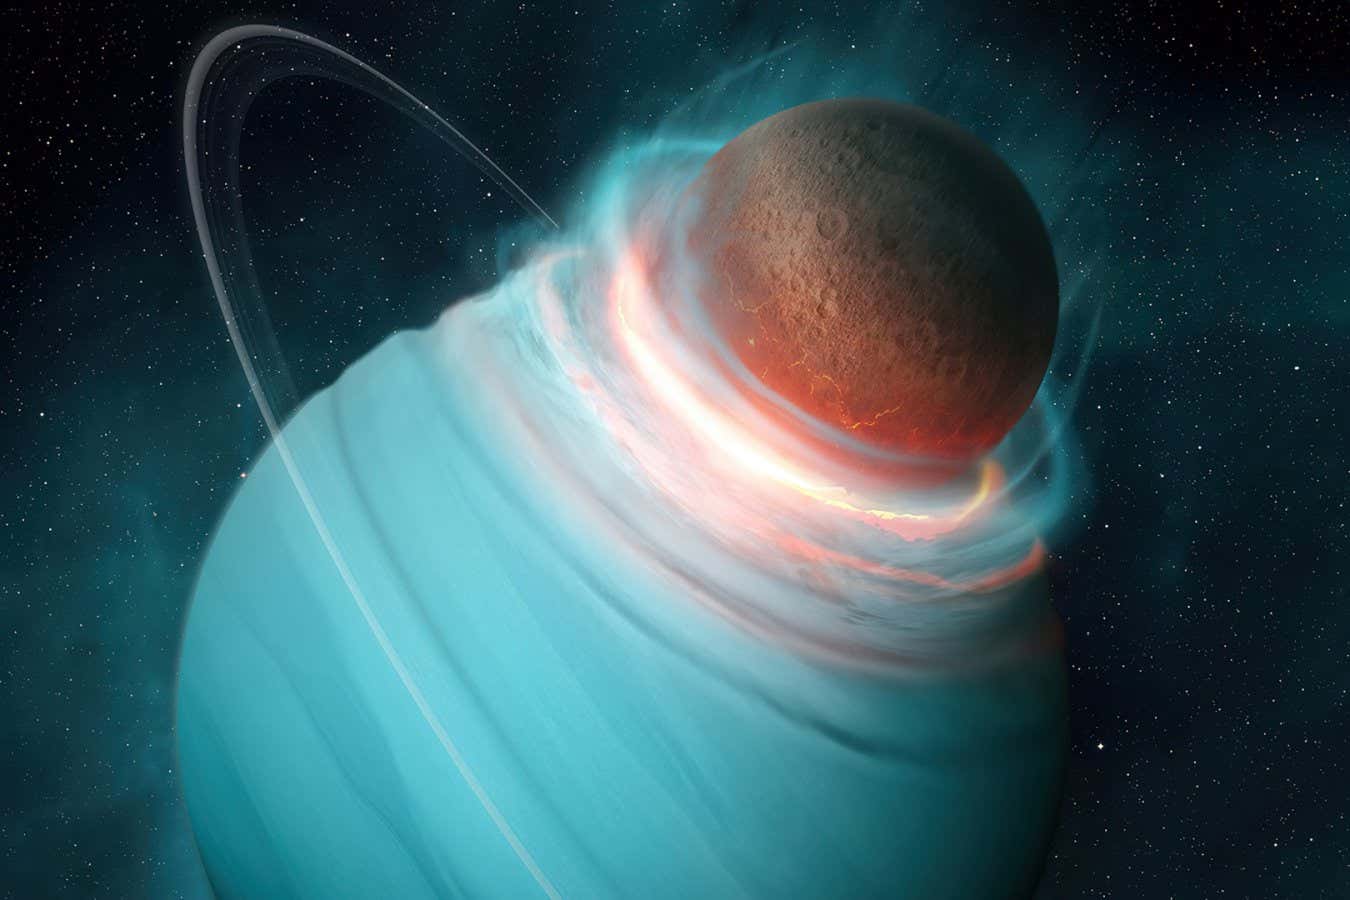 Could we set Uranus on fire to steal its hidden diamonds?